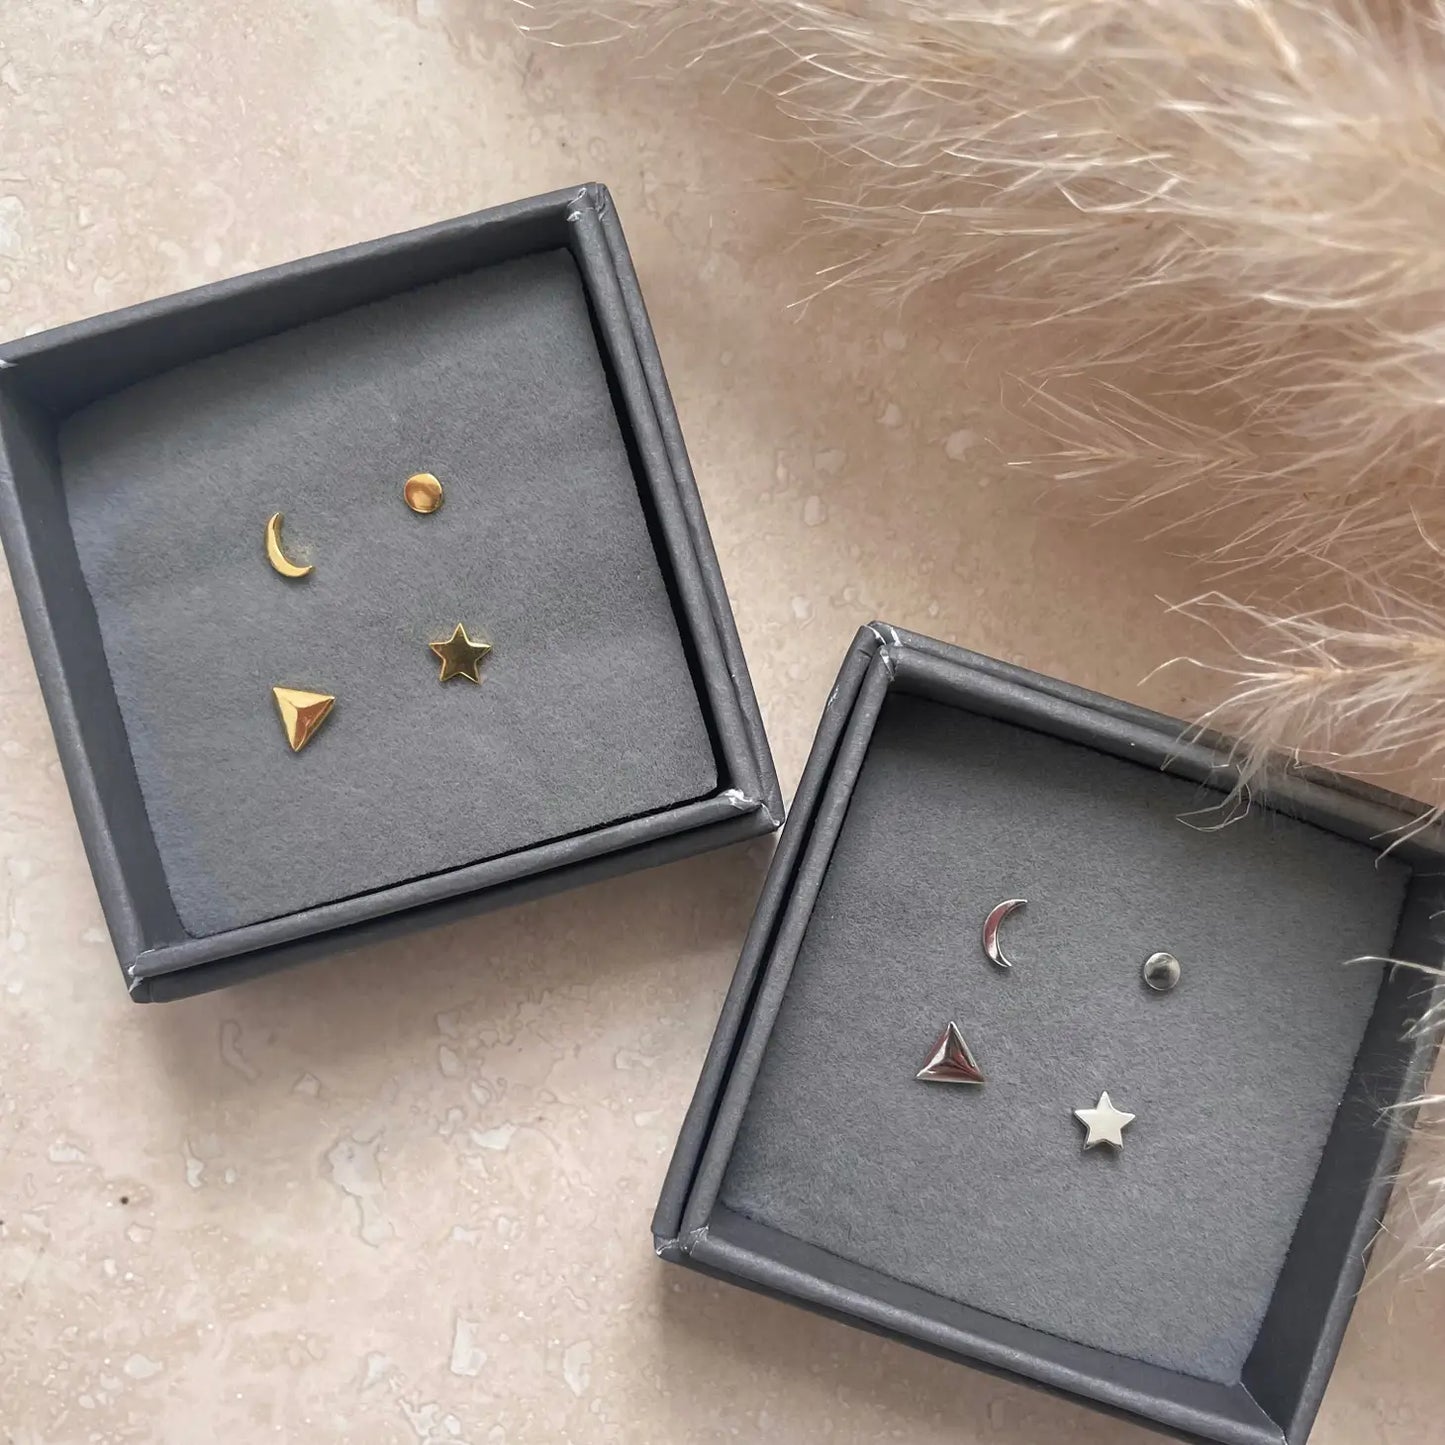 Moon and star stud earrings